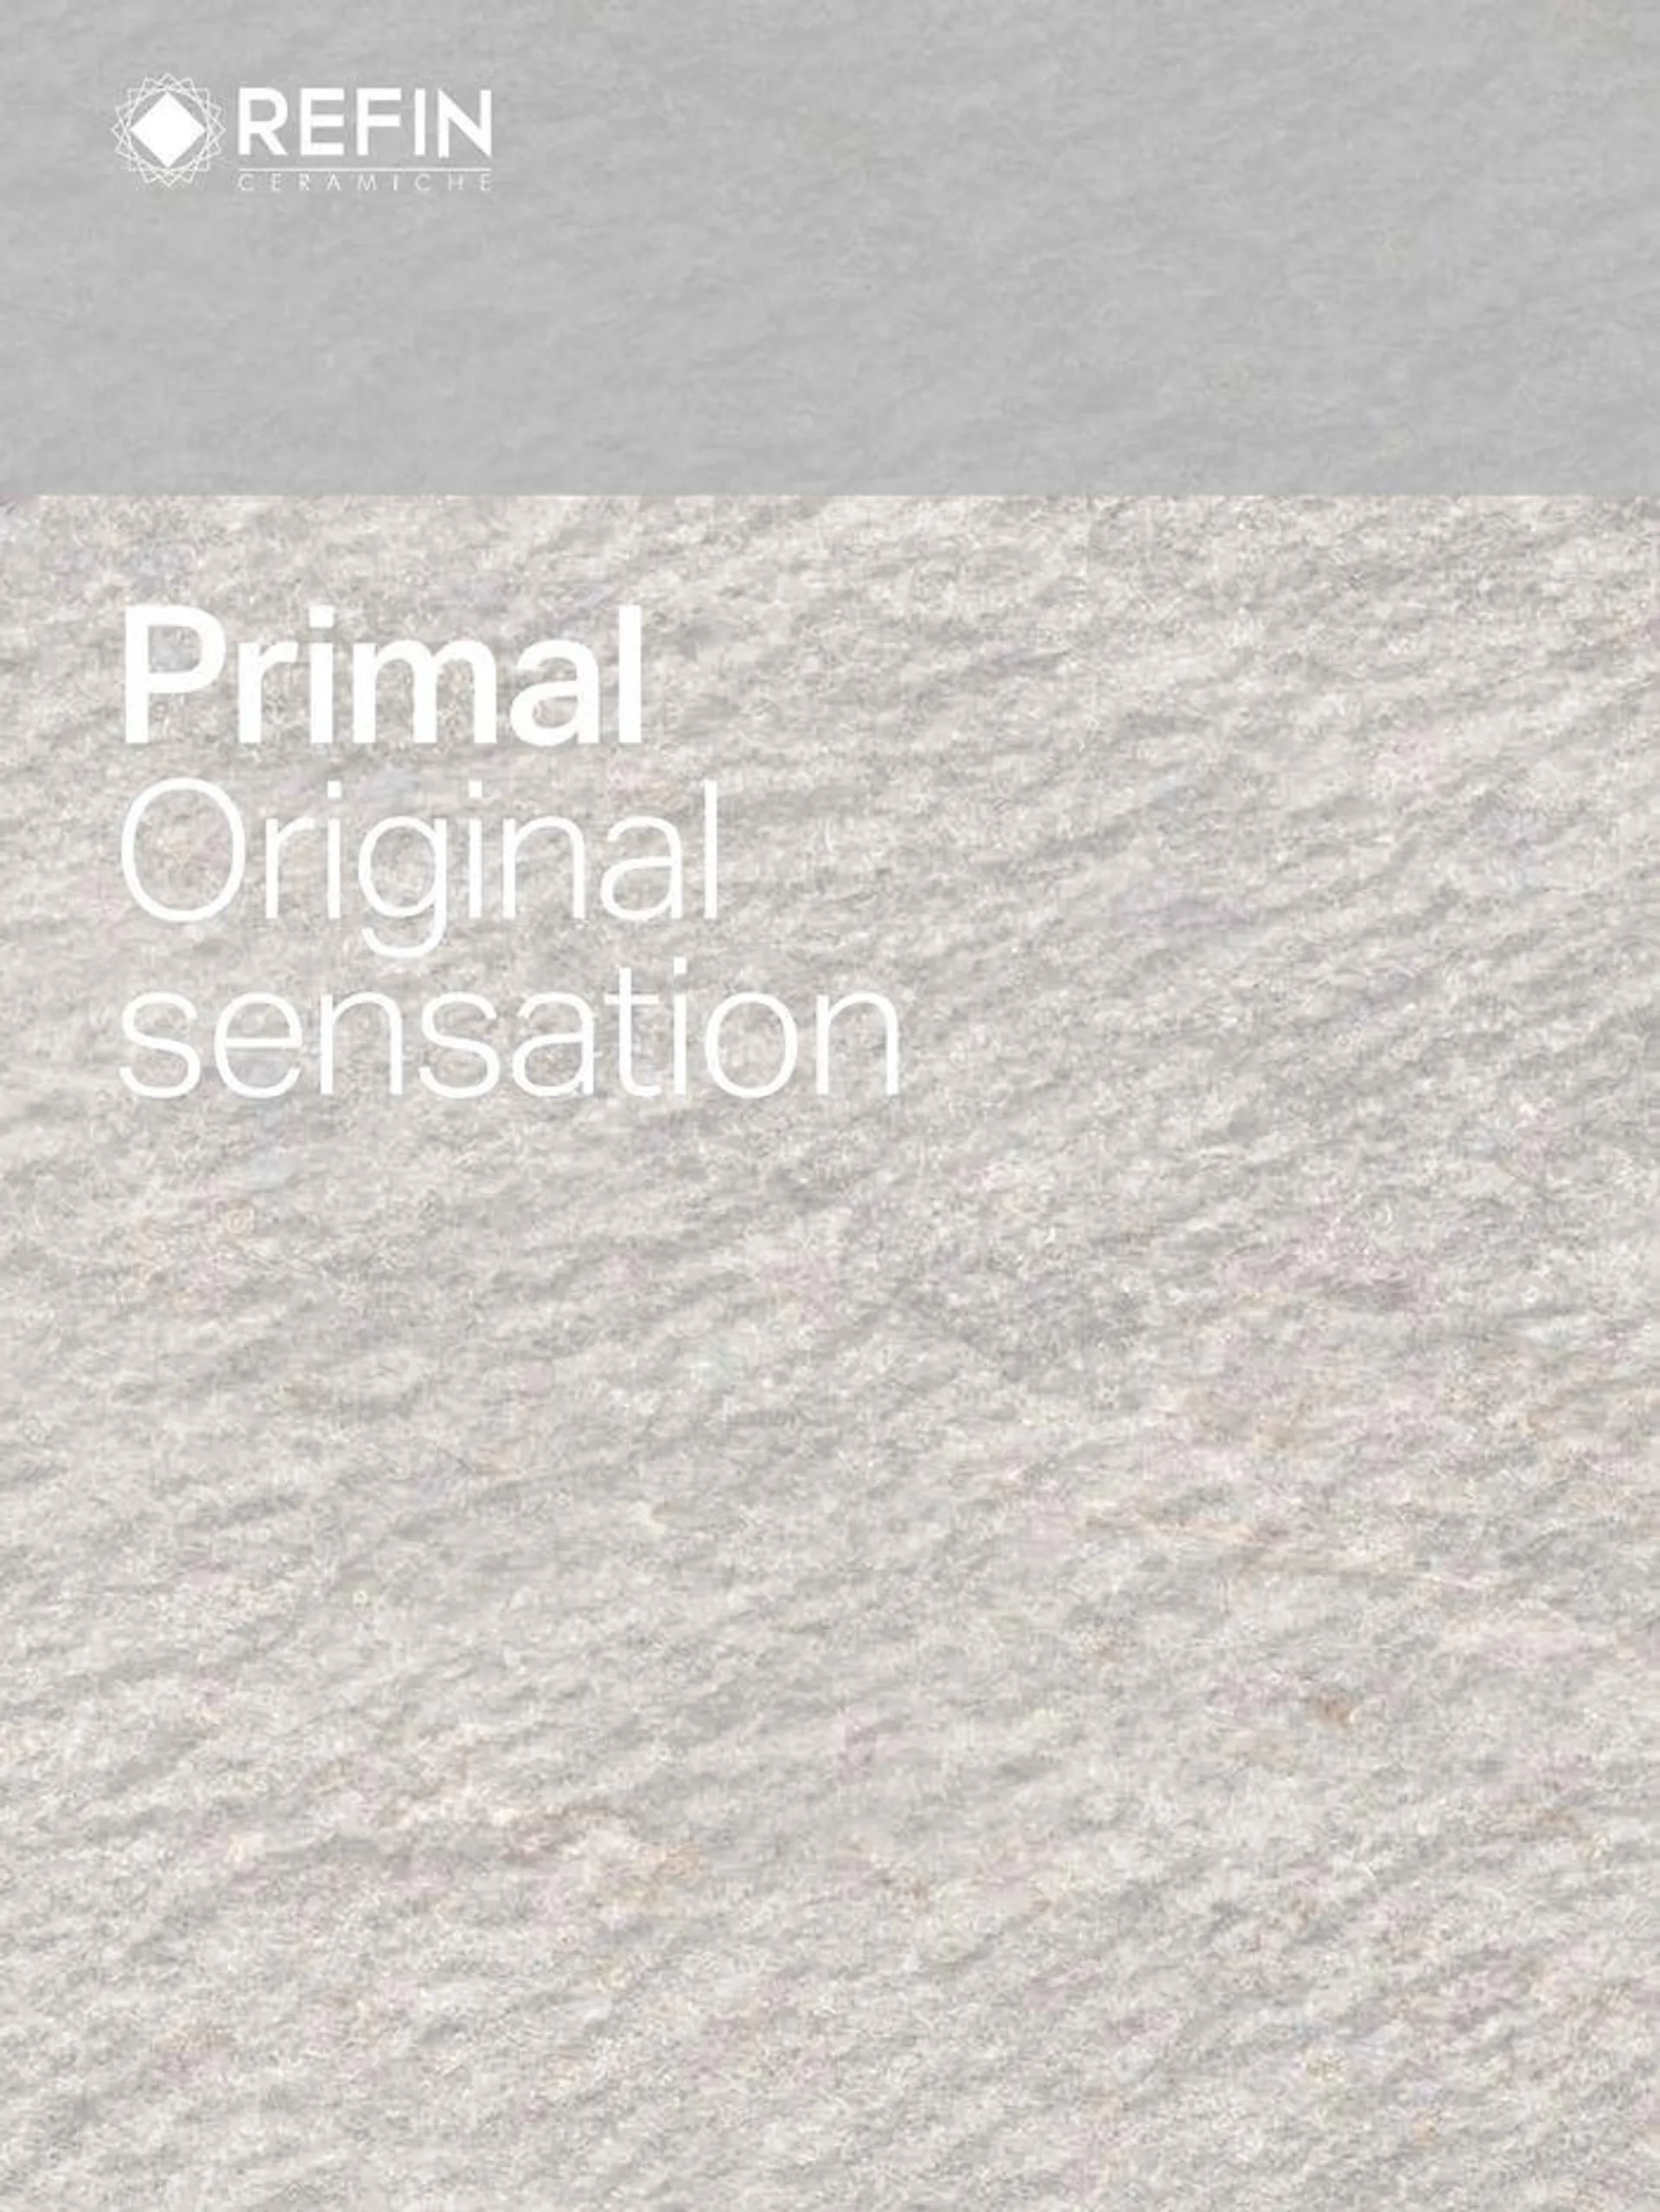 Primal Original Sensation - 1